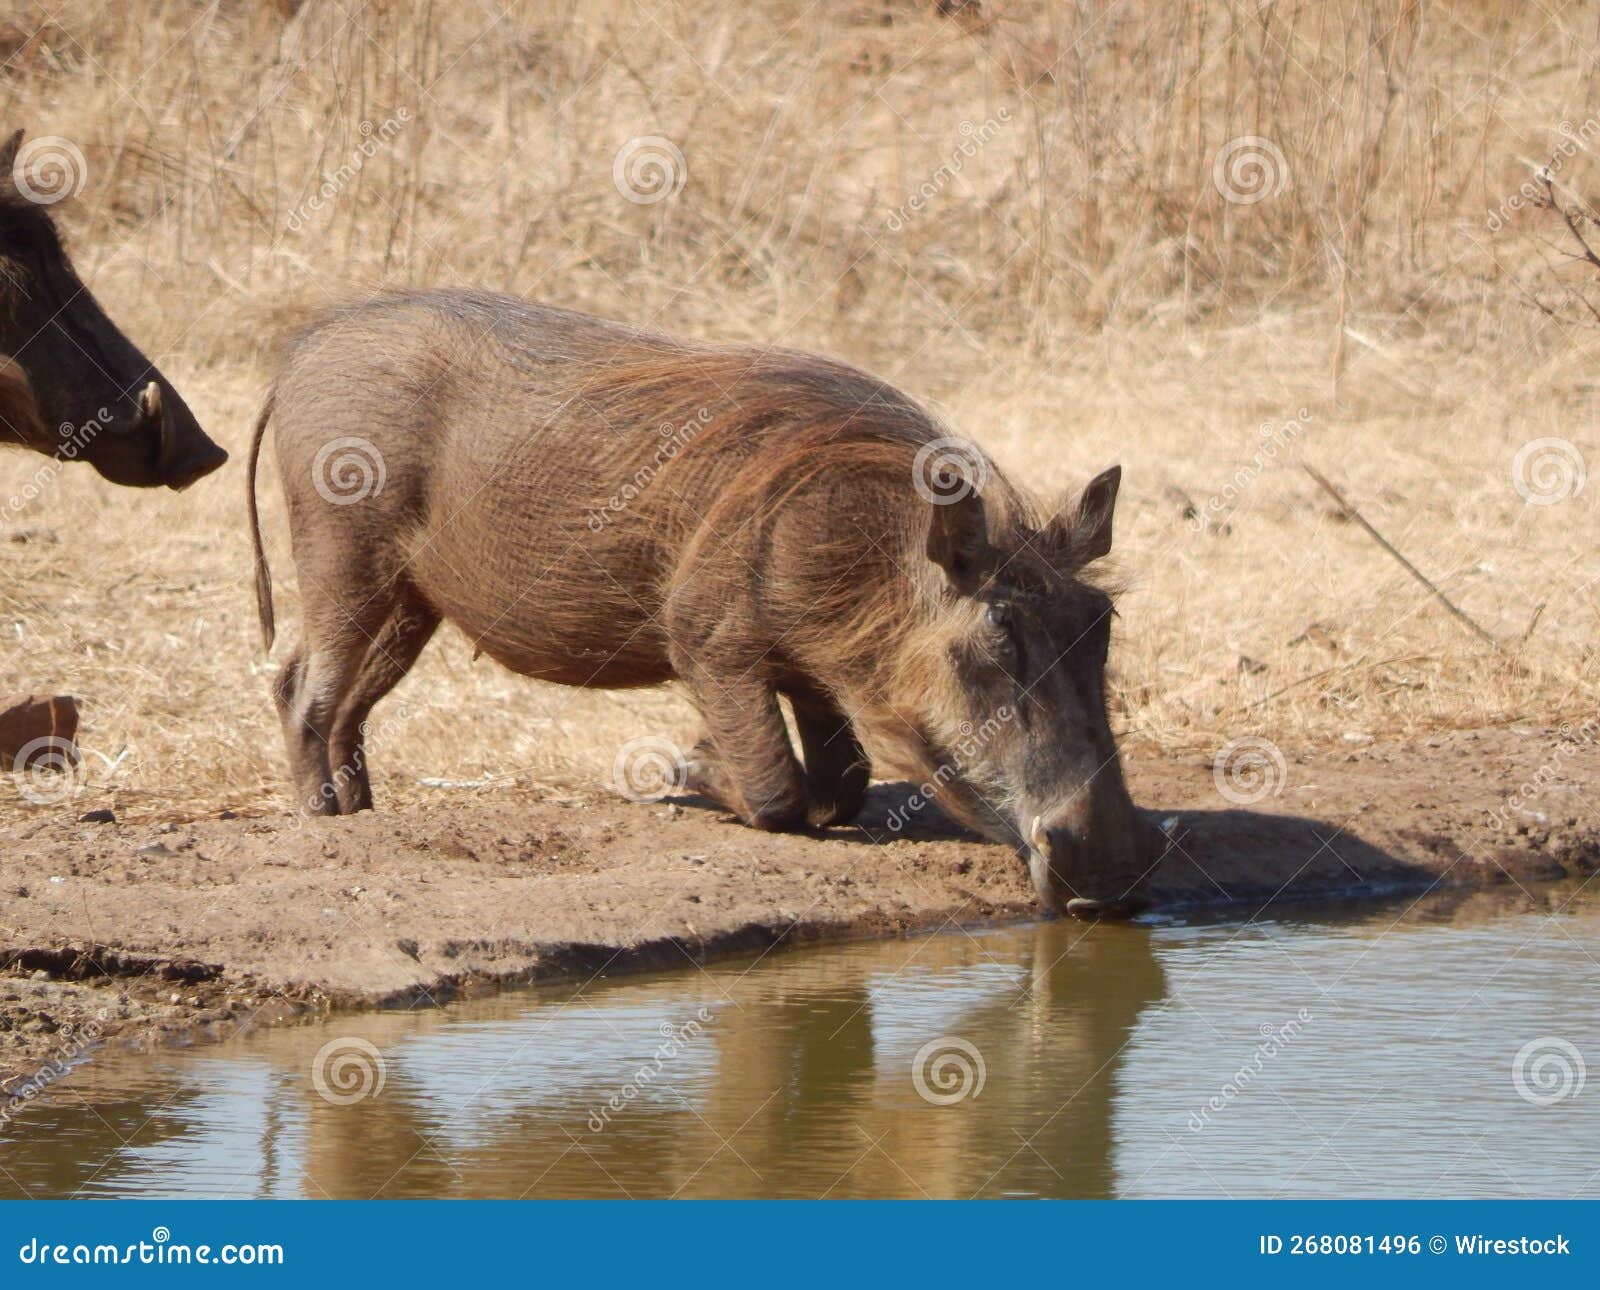 https://thumbs.dreamstime.com/z/common-warthog-drinking-watering-hole-common-warthog-drinking-watering-hole-268081496.jpg